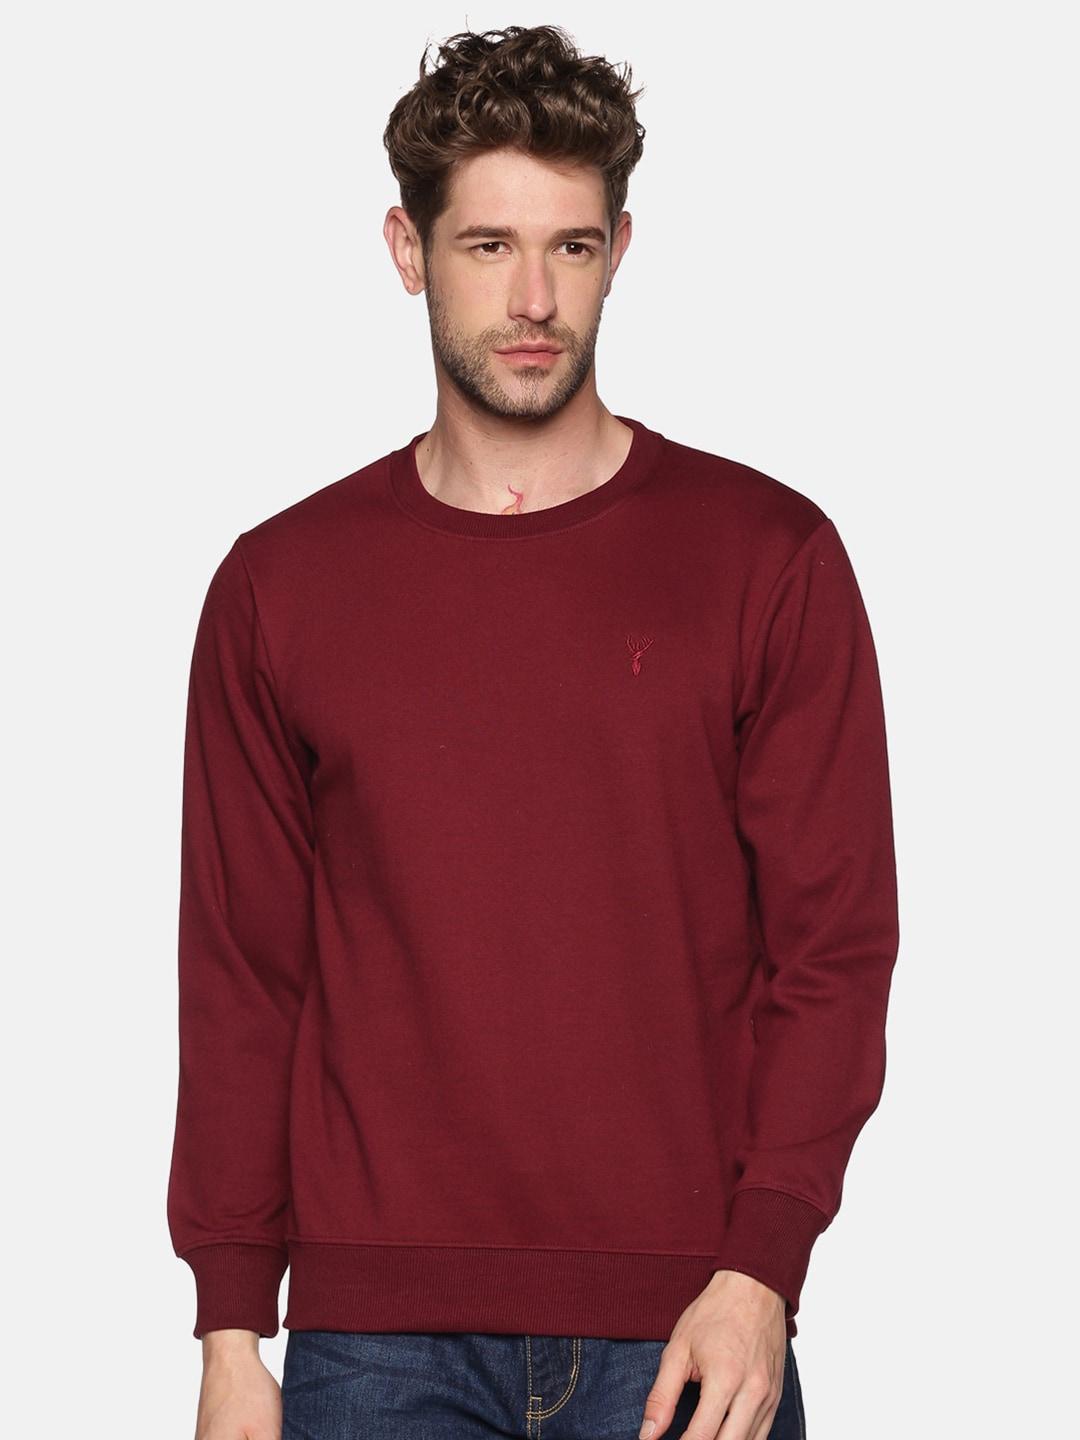 showoff-men-maroon-cotton-sweatshirt